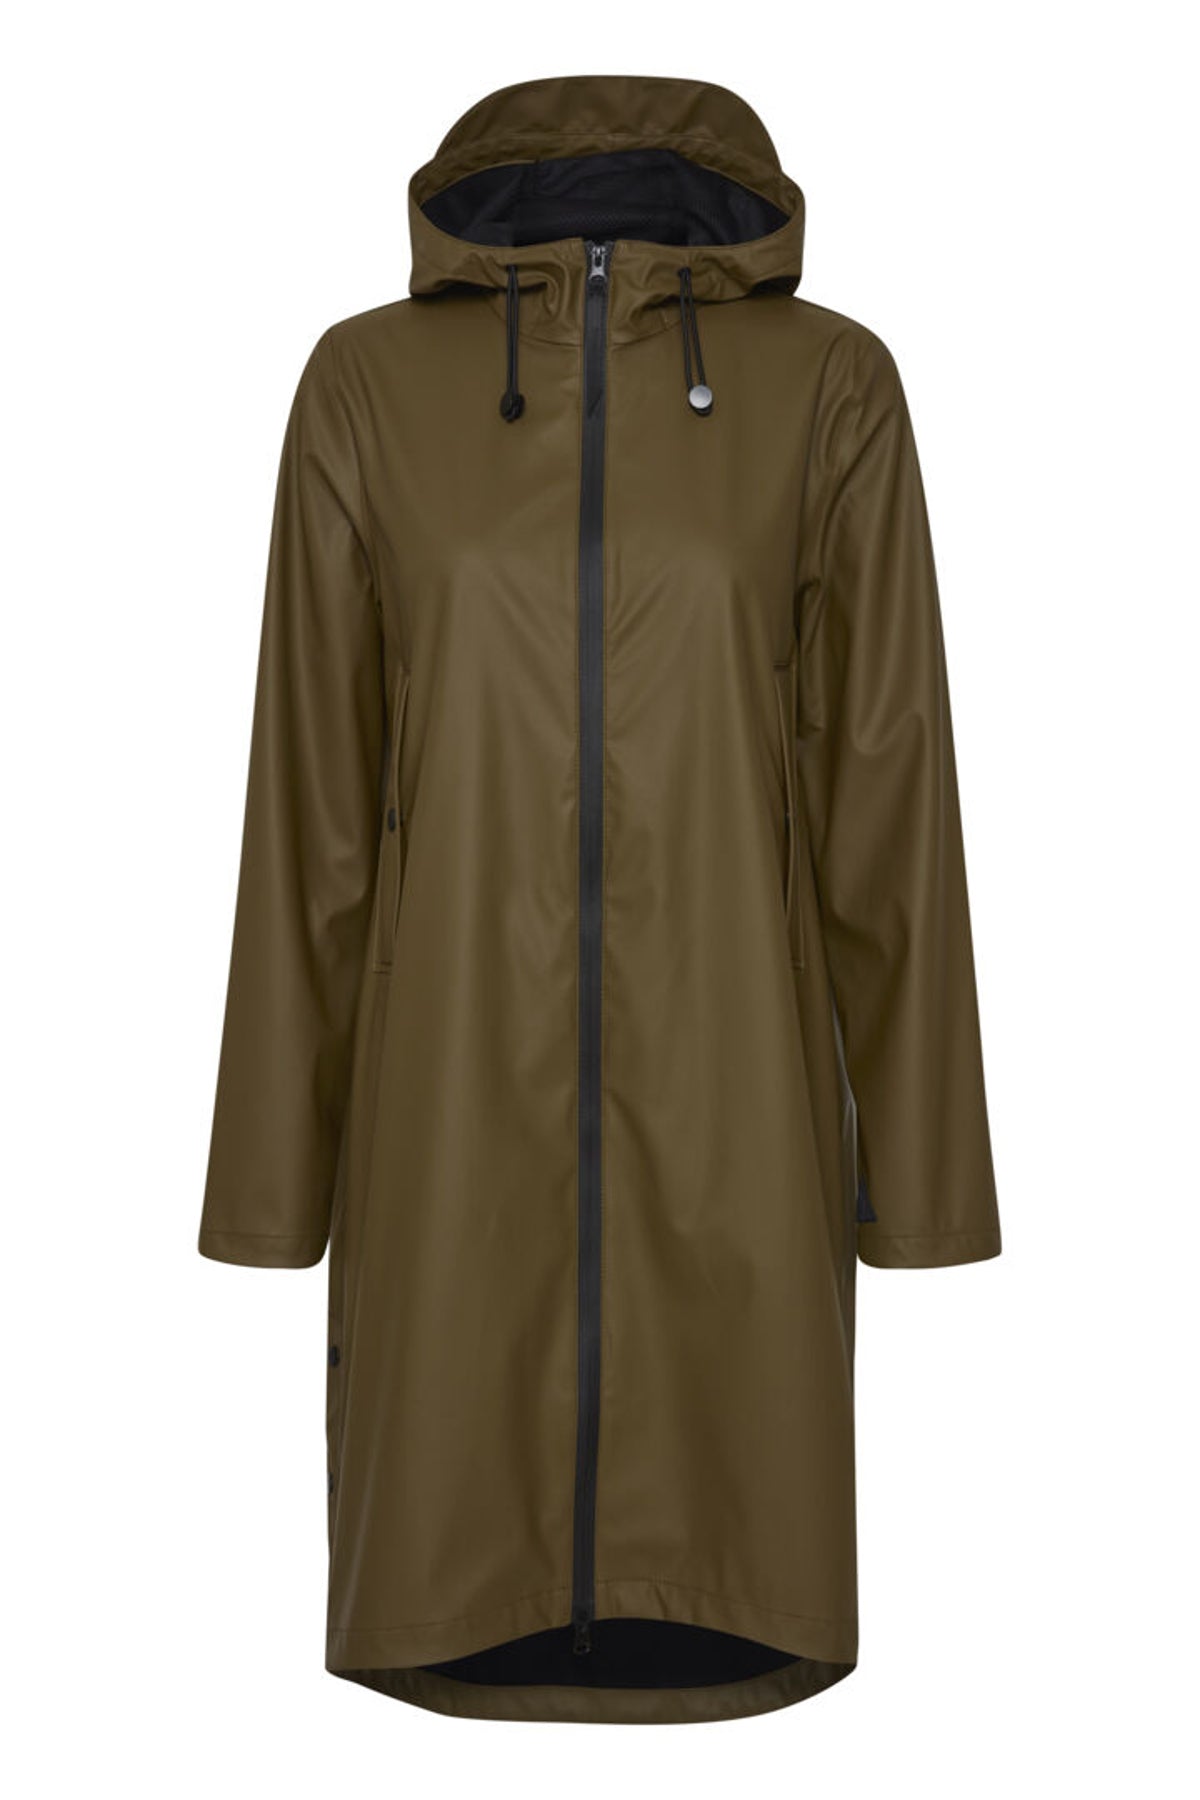 Avan long raincoat, olive